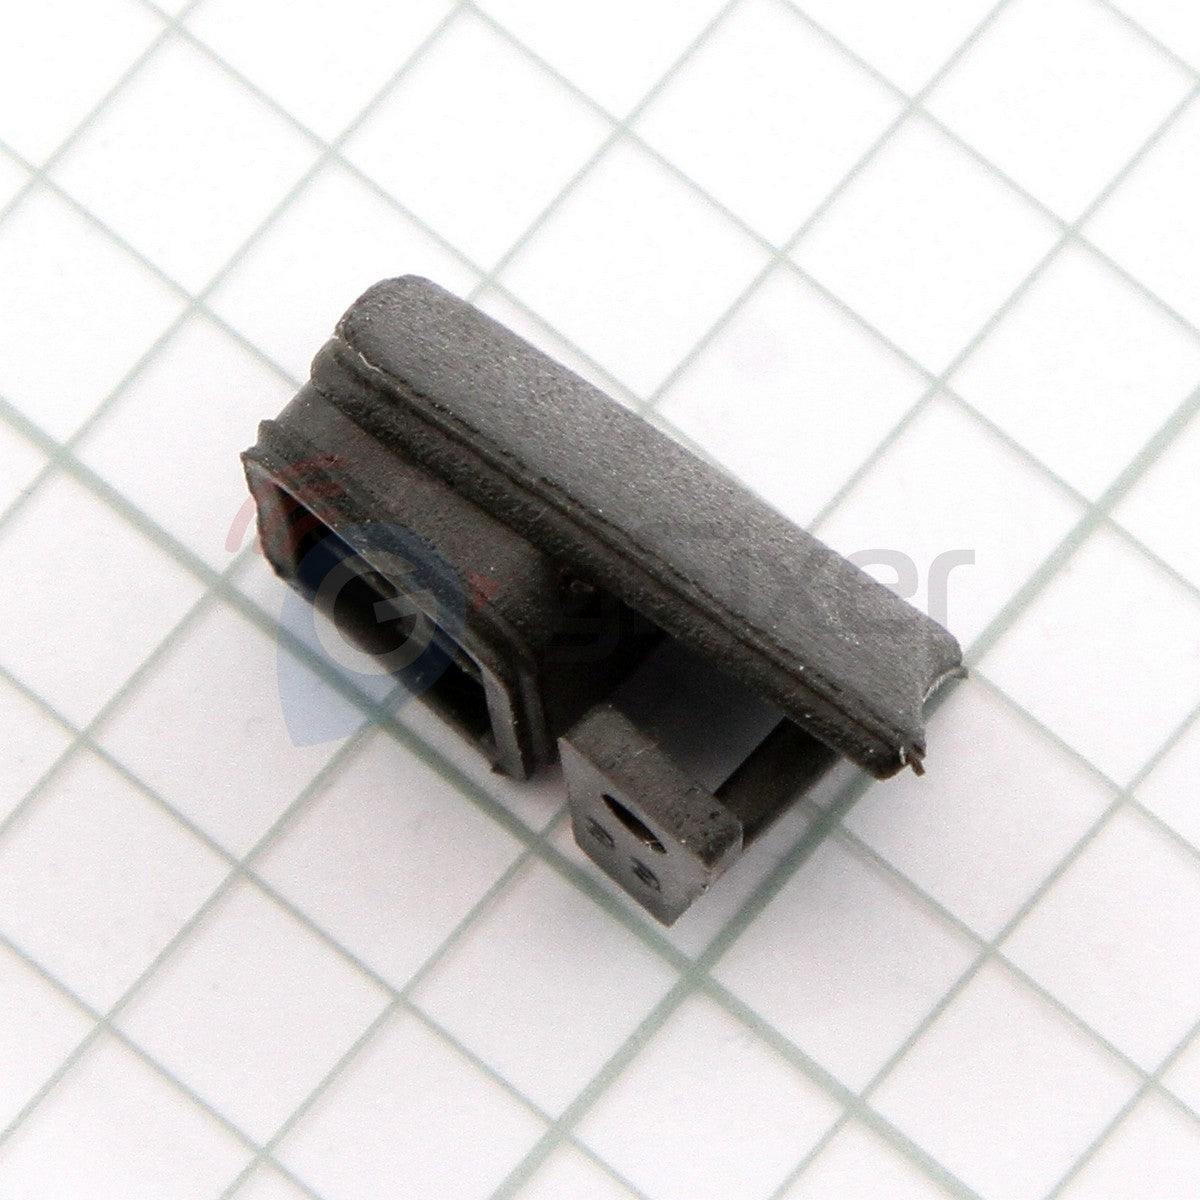 Rubber cap USB  for Garmin GPSMAP  64csx  New